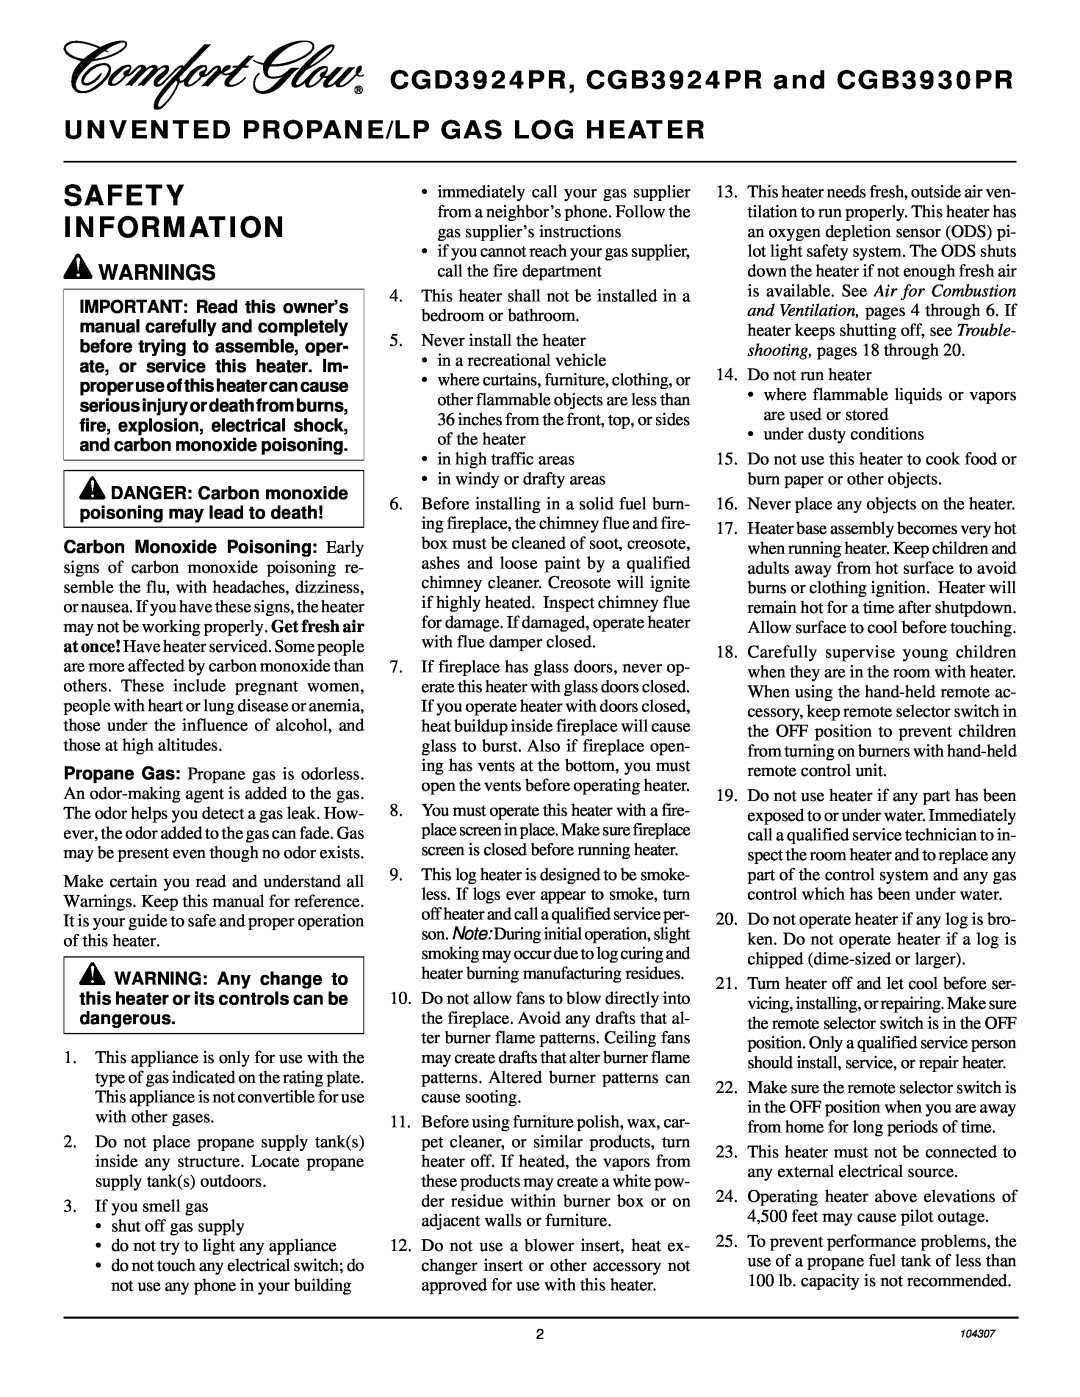 Desa Safety Information, CGD3924PR, CGB3924PR and CGB3930PR UNVENTED PROPANE/LP GAS LOG HEATER, Warnings 